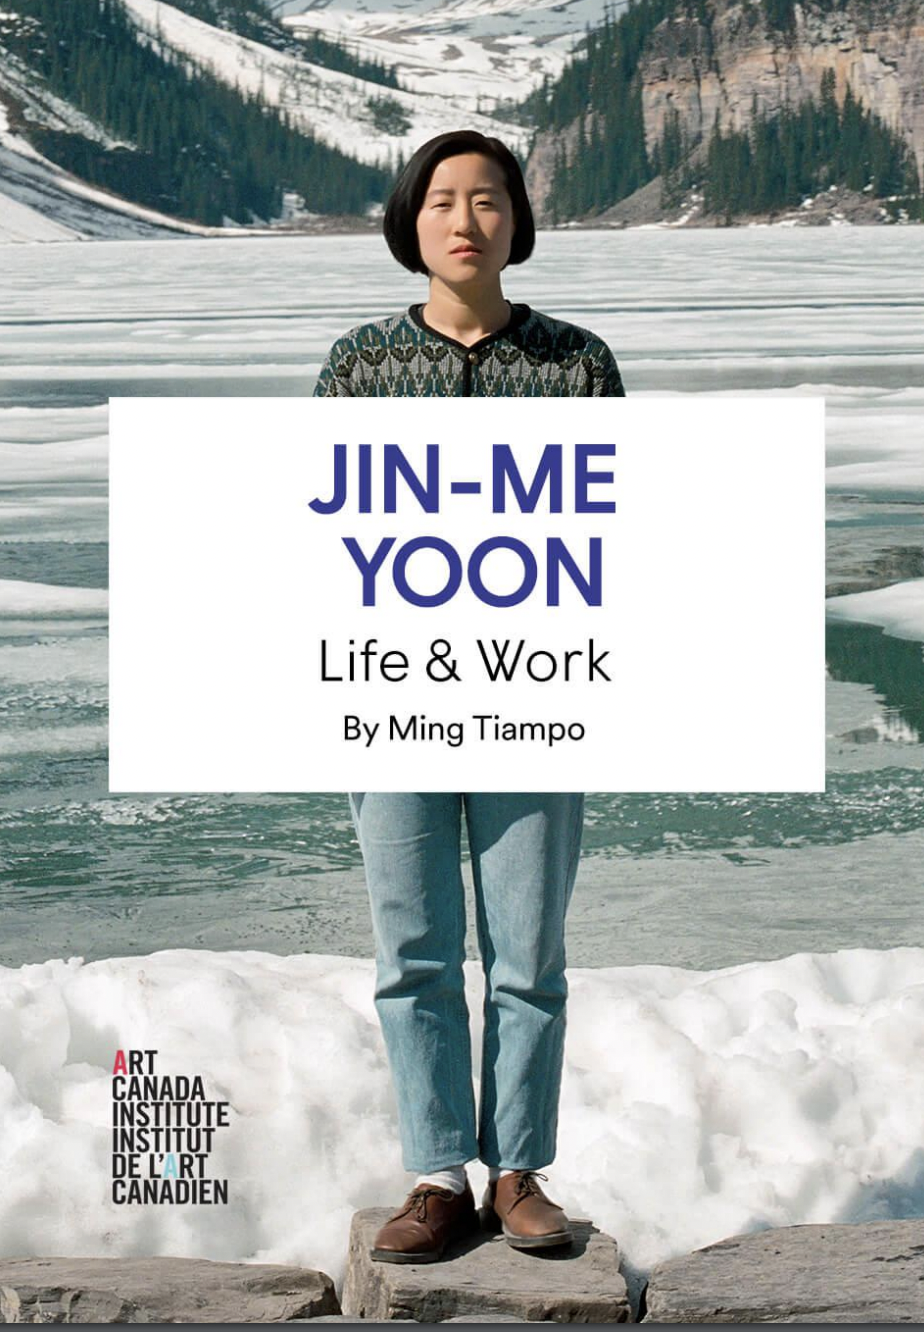 Art and Architecture Professor Ming Tiampo publishes new book Jin-Me ...